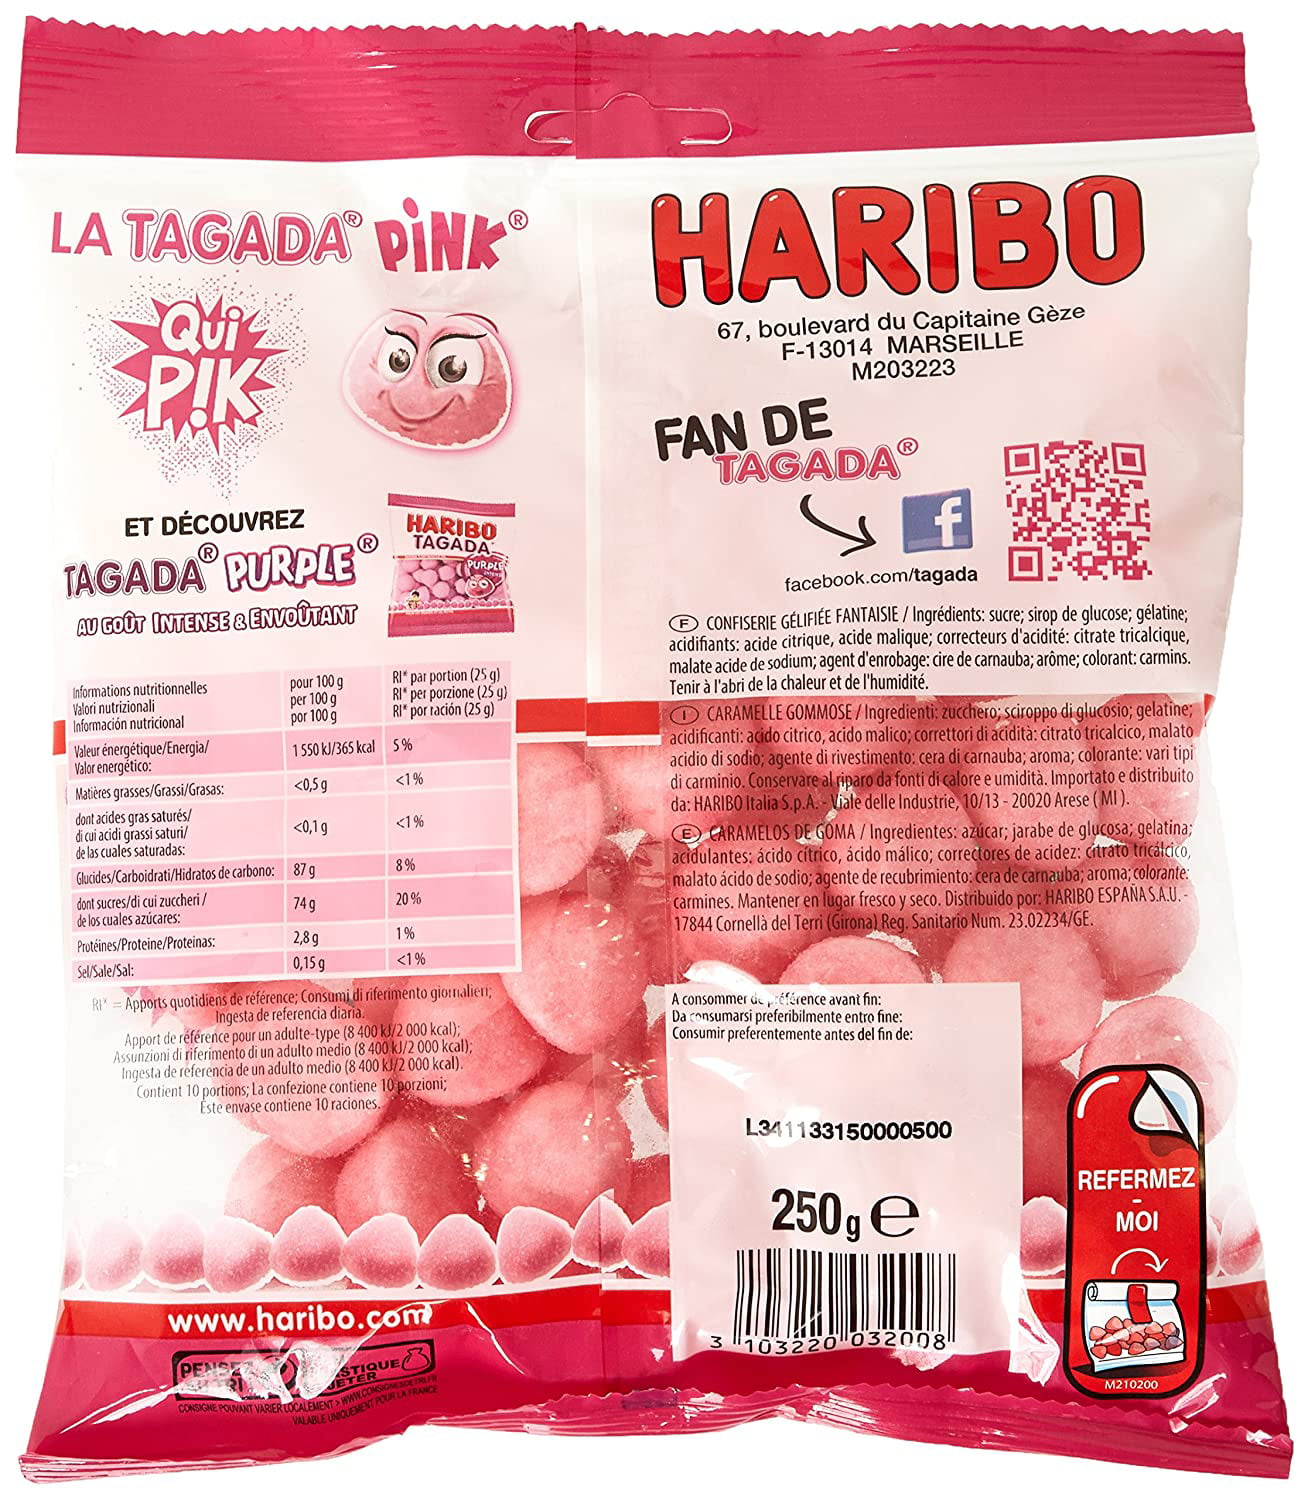 Haribo Fraise Tagada Pink 250g